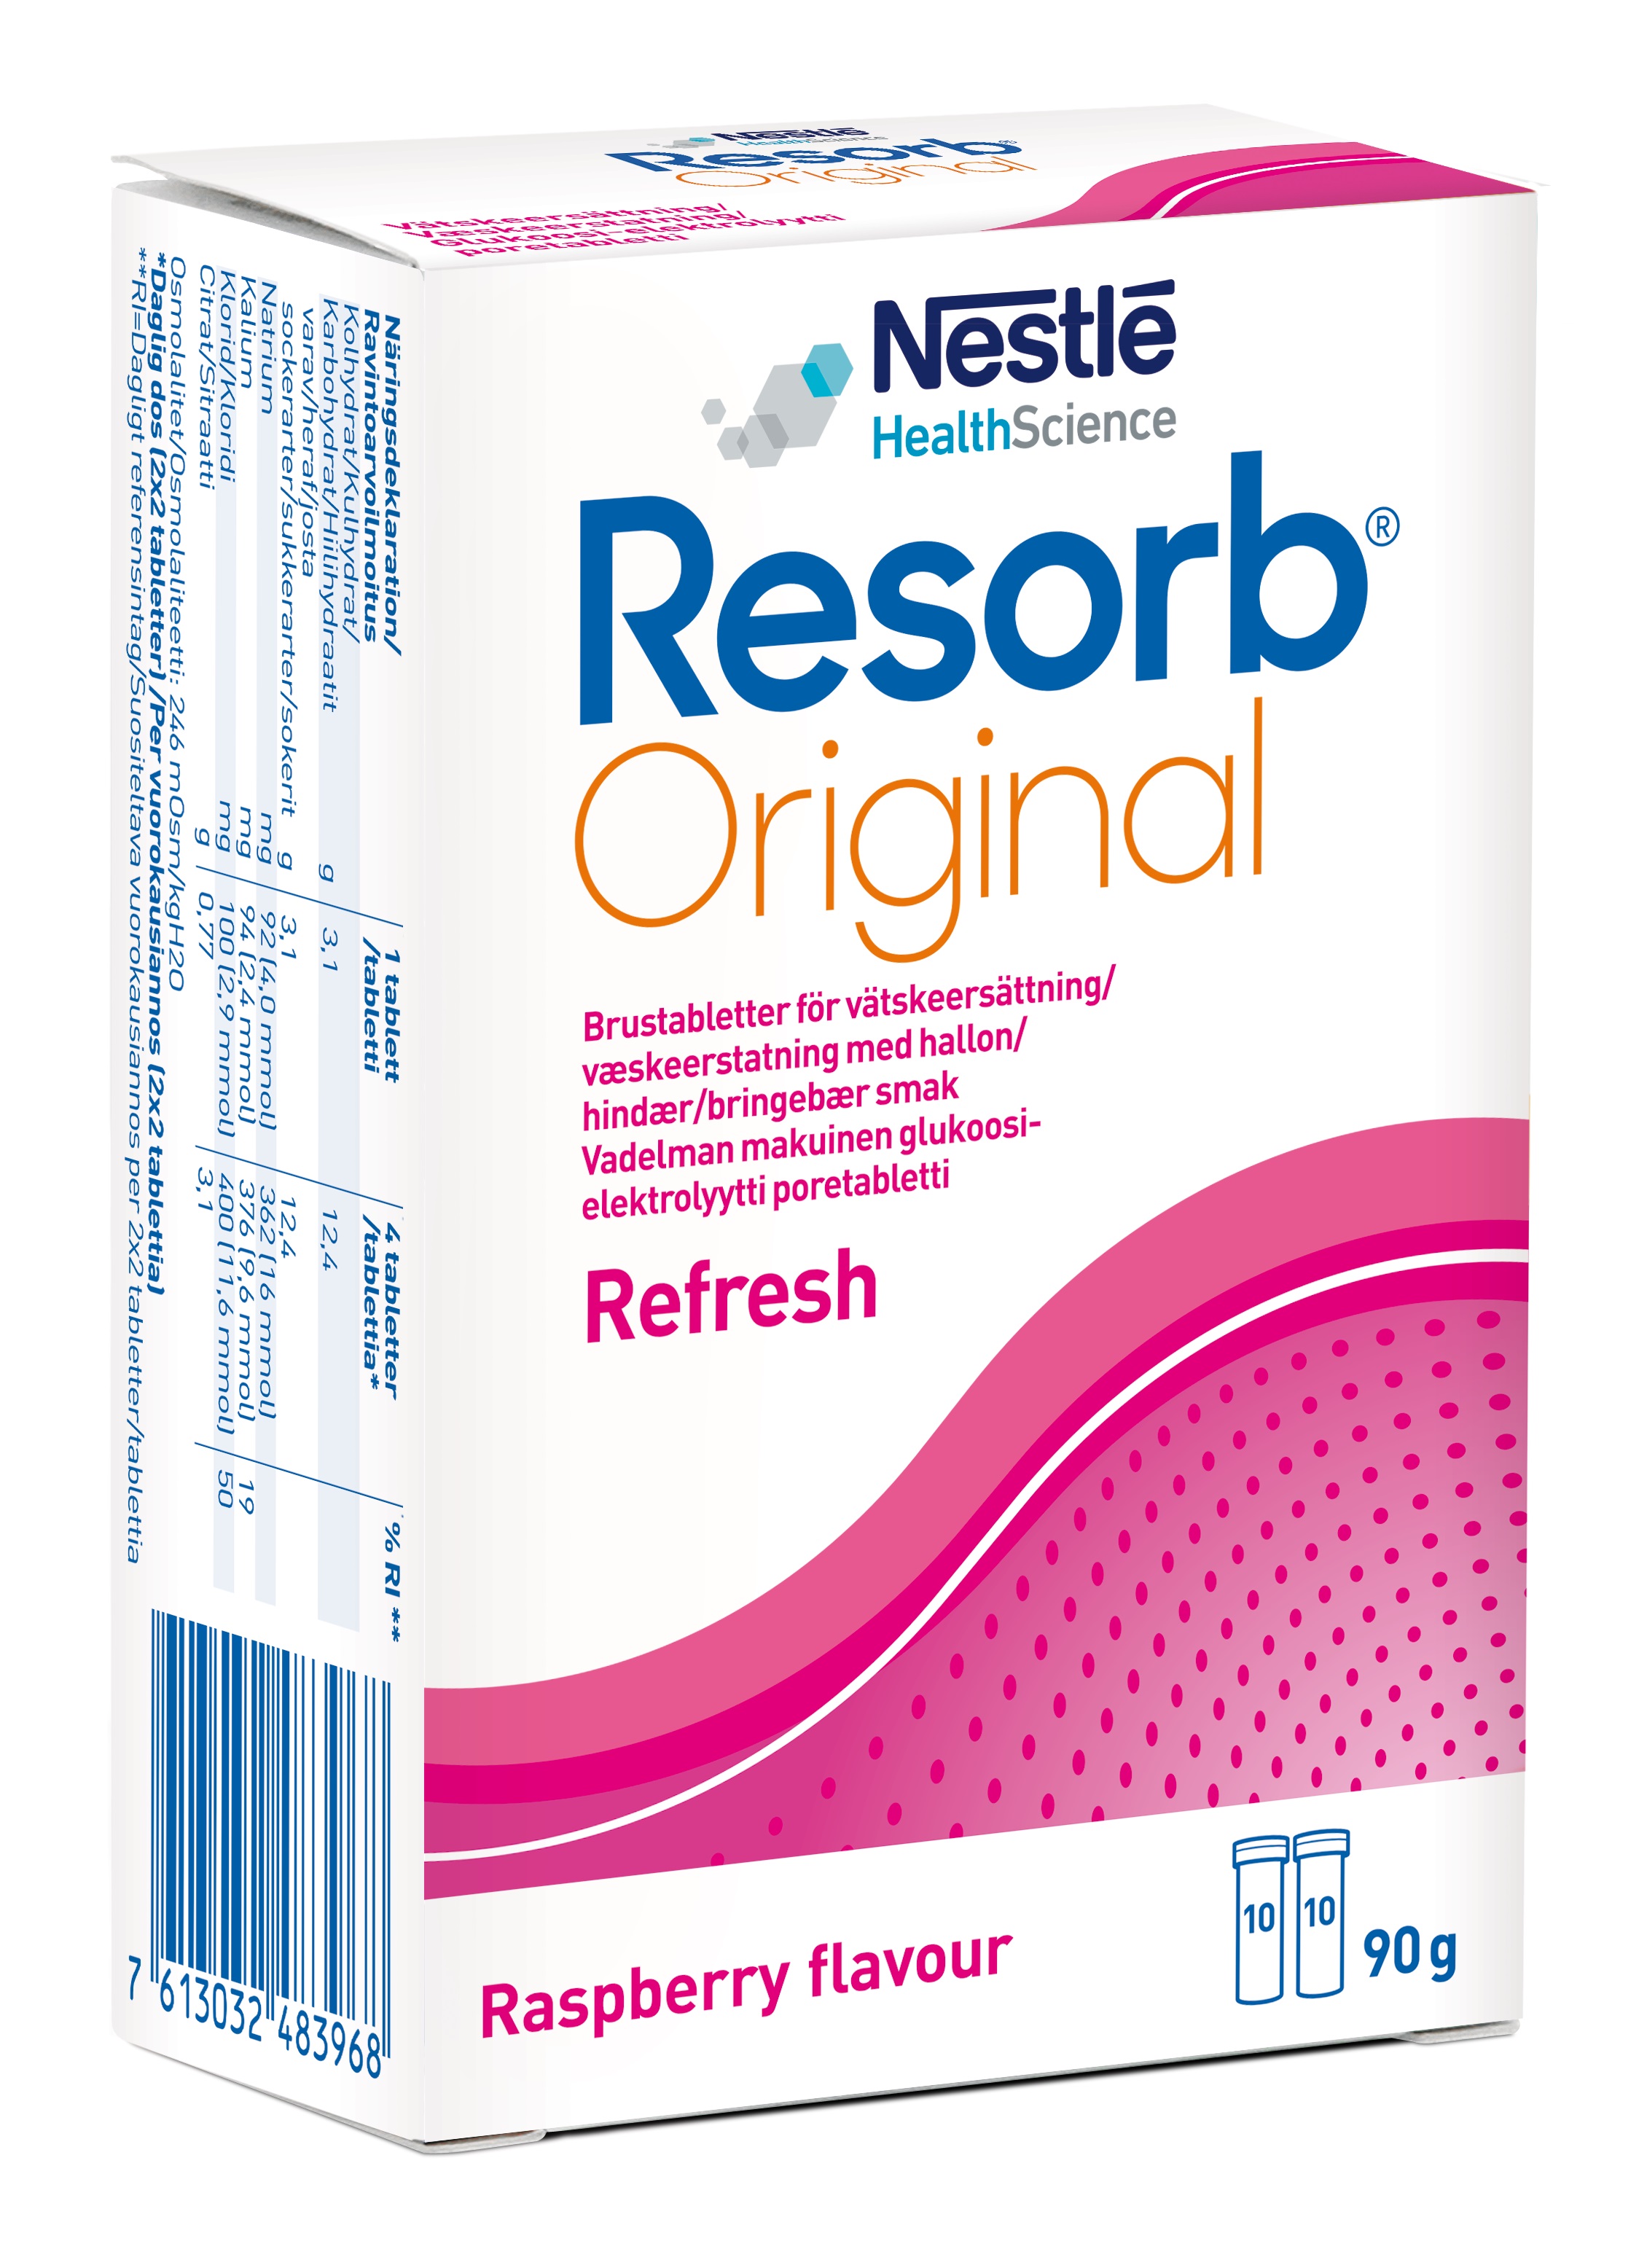 Resorb Original Refresh Brusetabletter, Bringebærsmak, 2 x 10 stk.